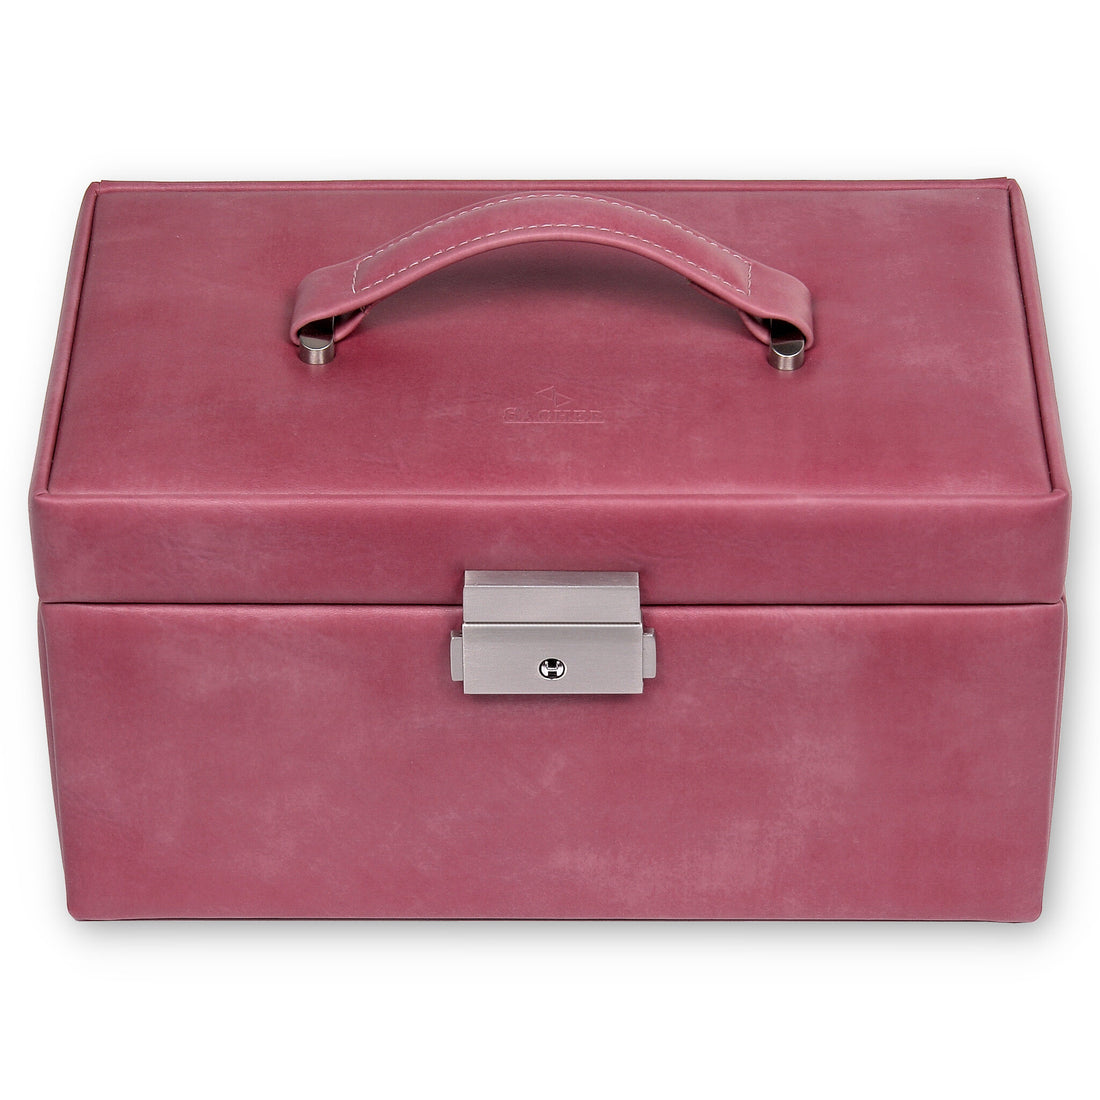 Schmuckkasten Elly pastello rosé 1846 Offizieller – Manufaktur | SACHER Store / alt